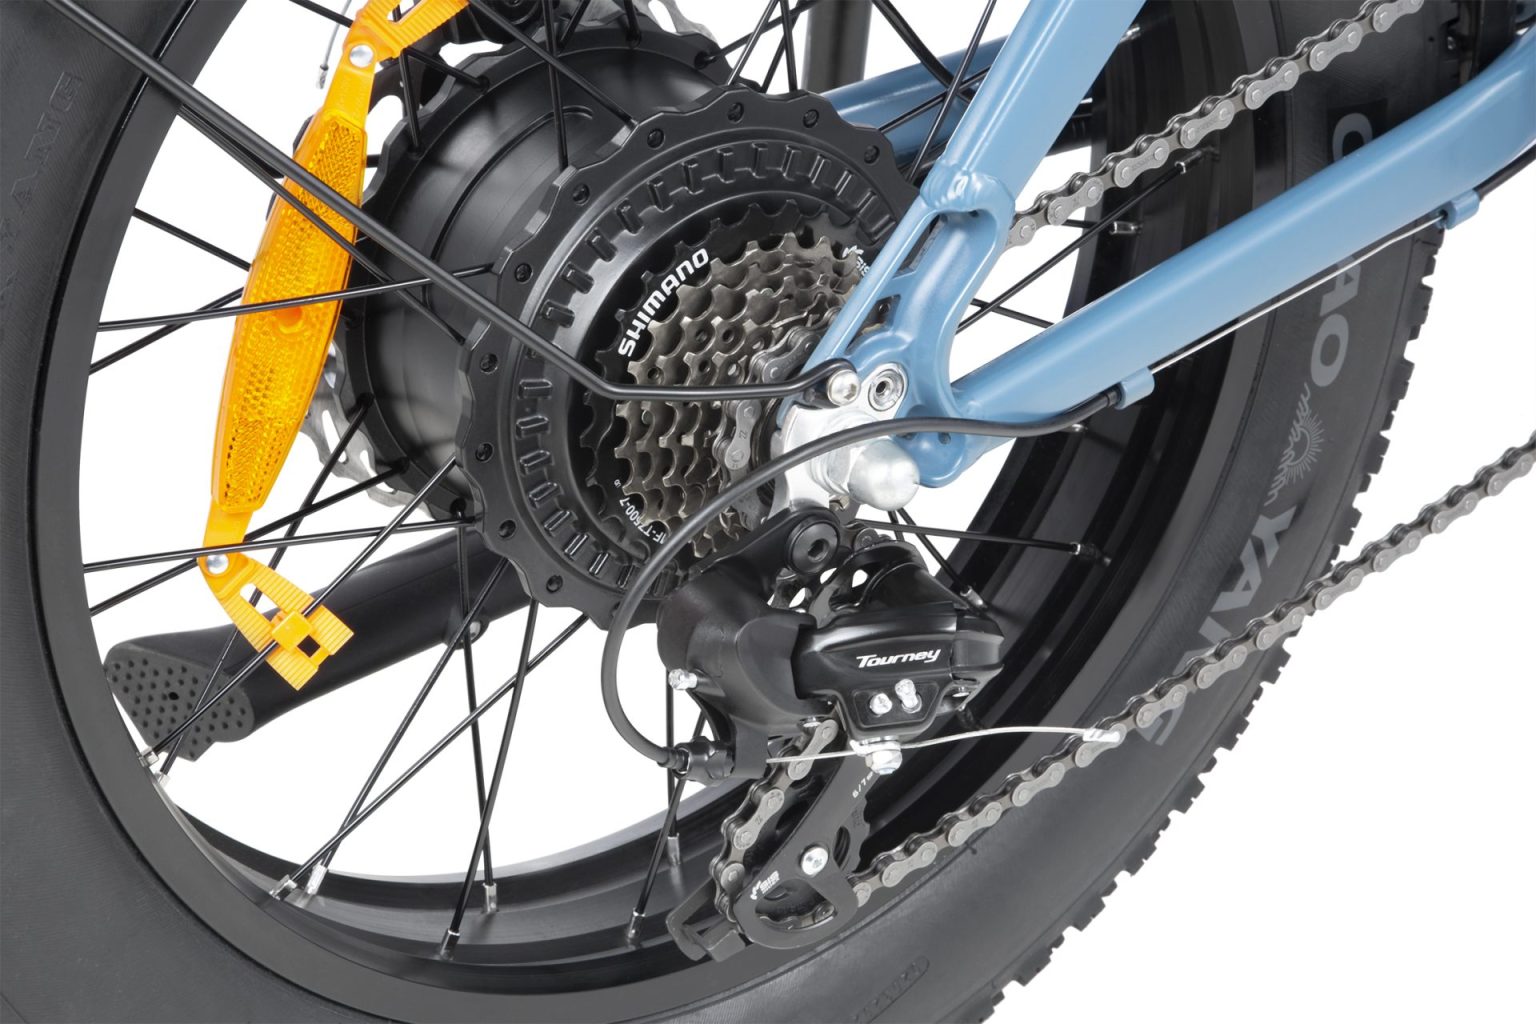 cmacewheel ks26 دراجات كهربائية مستعملة على ebay ebike ركاب ebike المصباح موتان الدراجة الكهربائية الدهون الإطارات دراجة ثلاثية العجلات الكهربائية